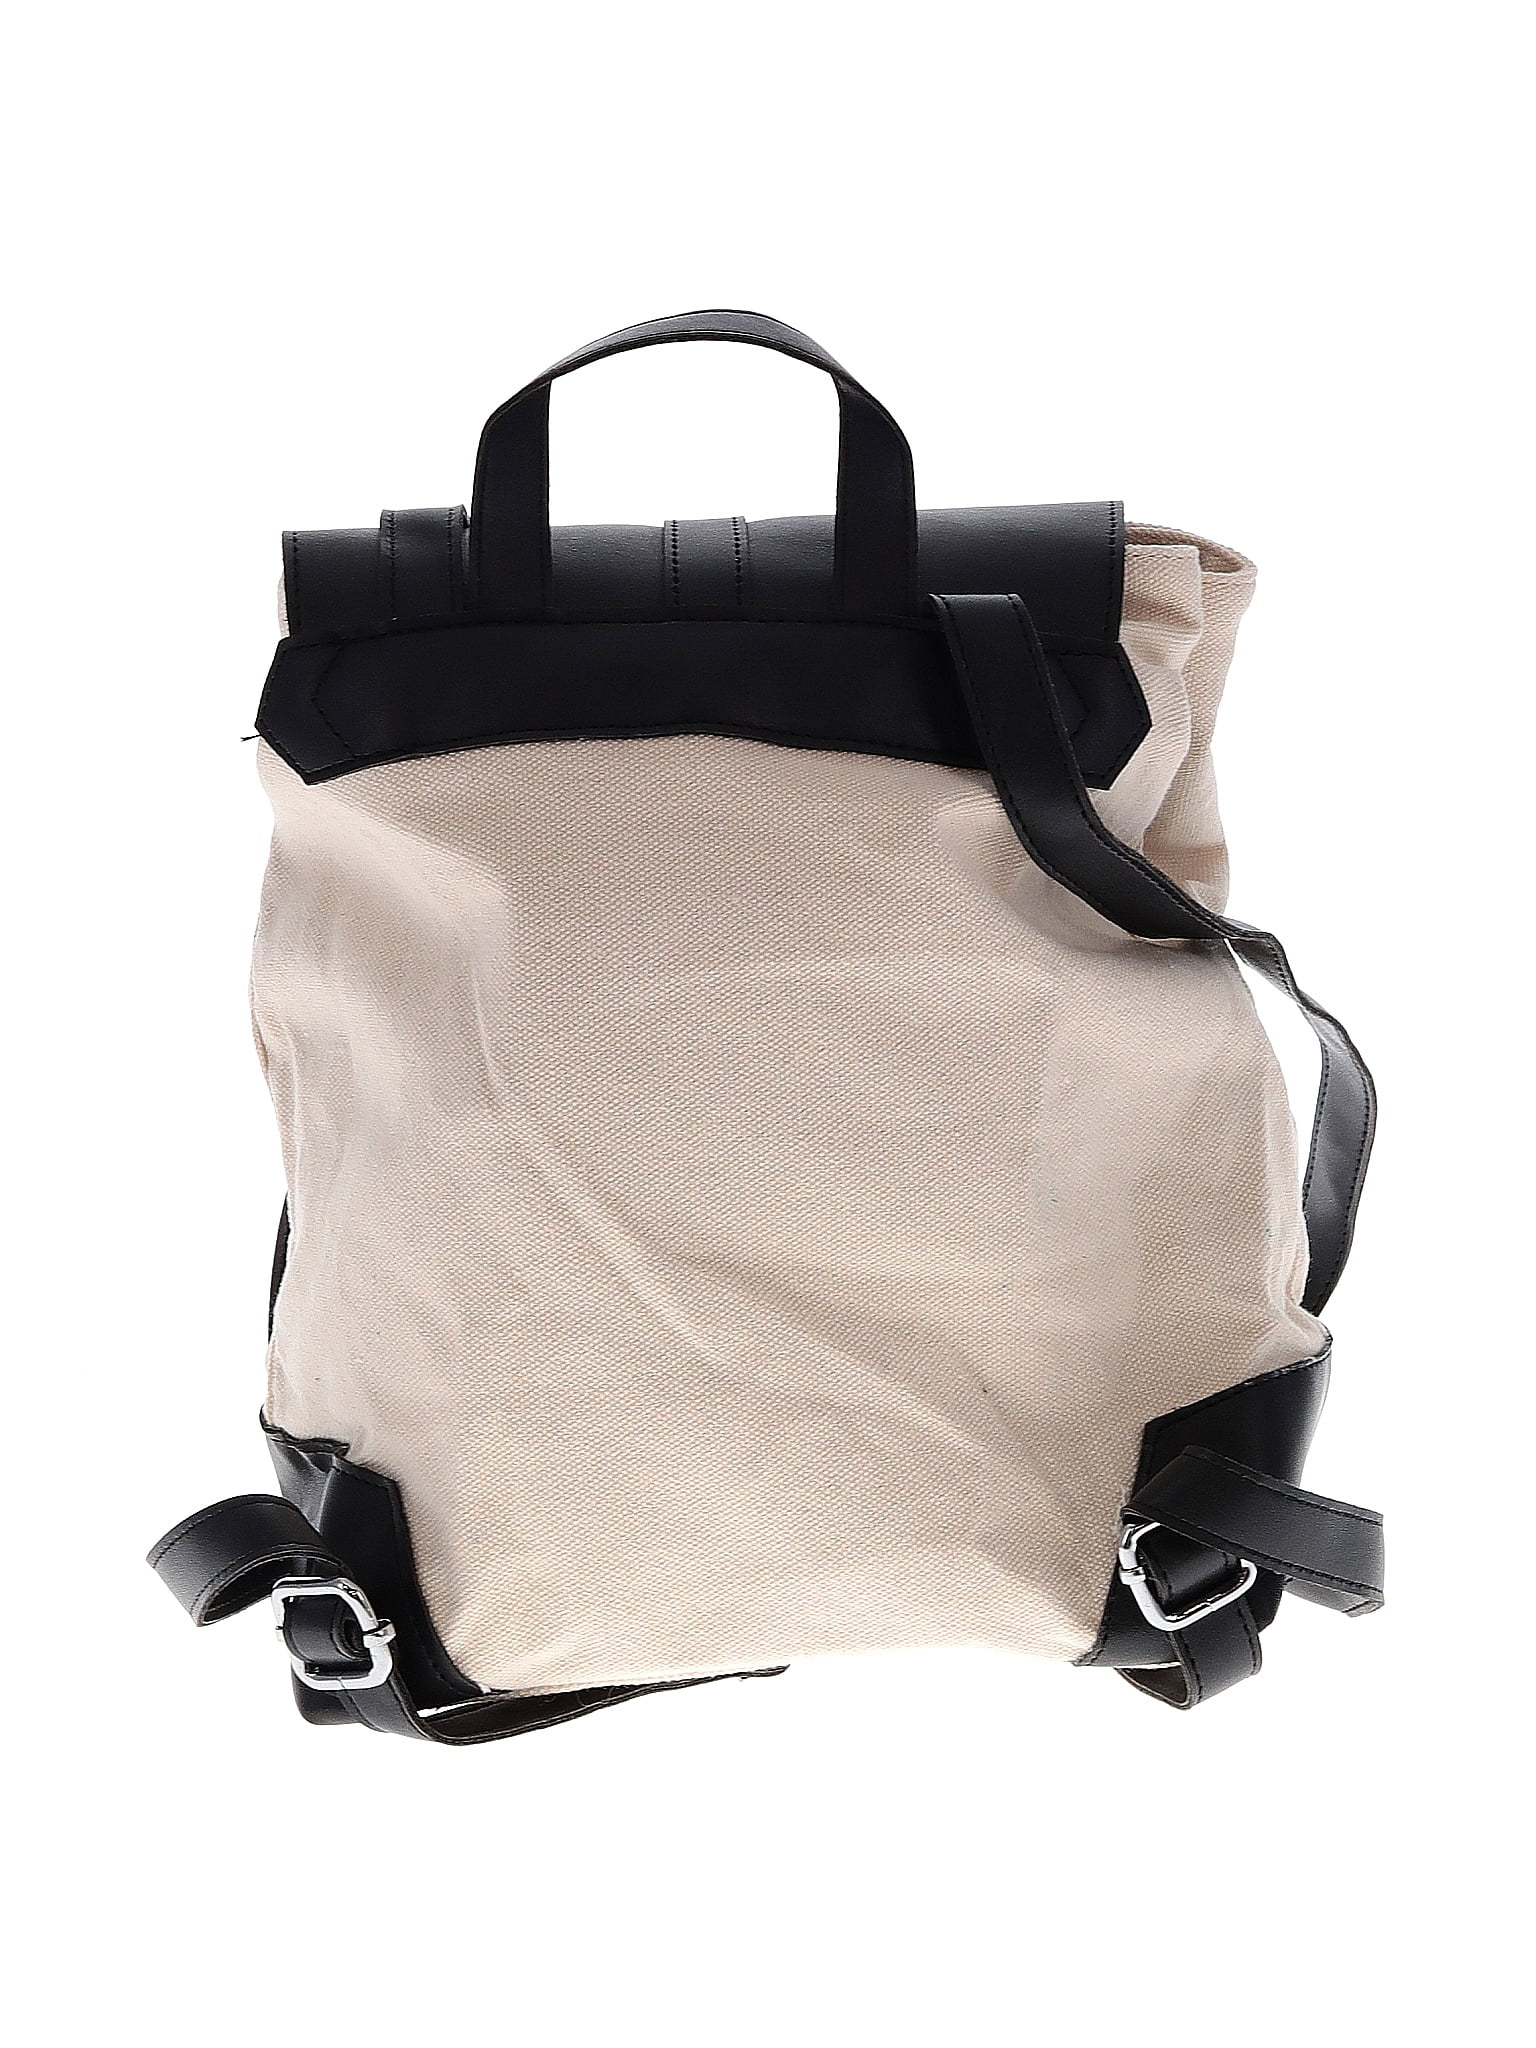 Deux Lux Color Block Black Ivory Backpack One Size - 75% off